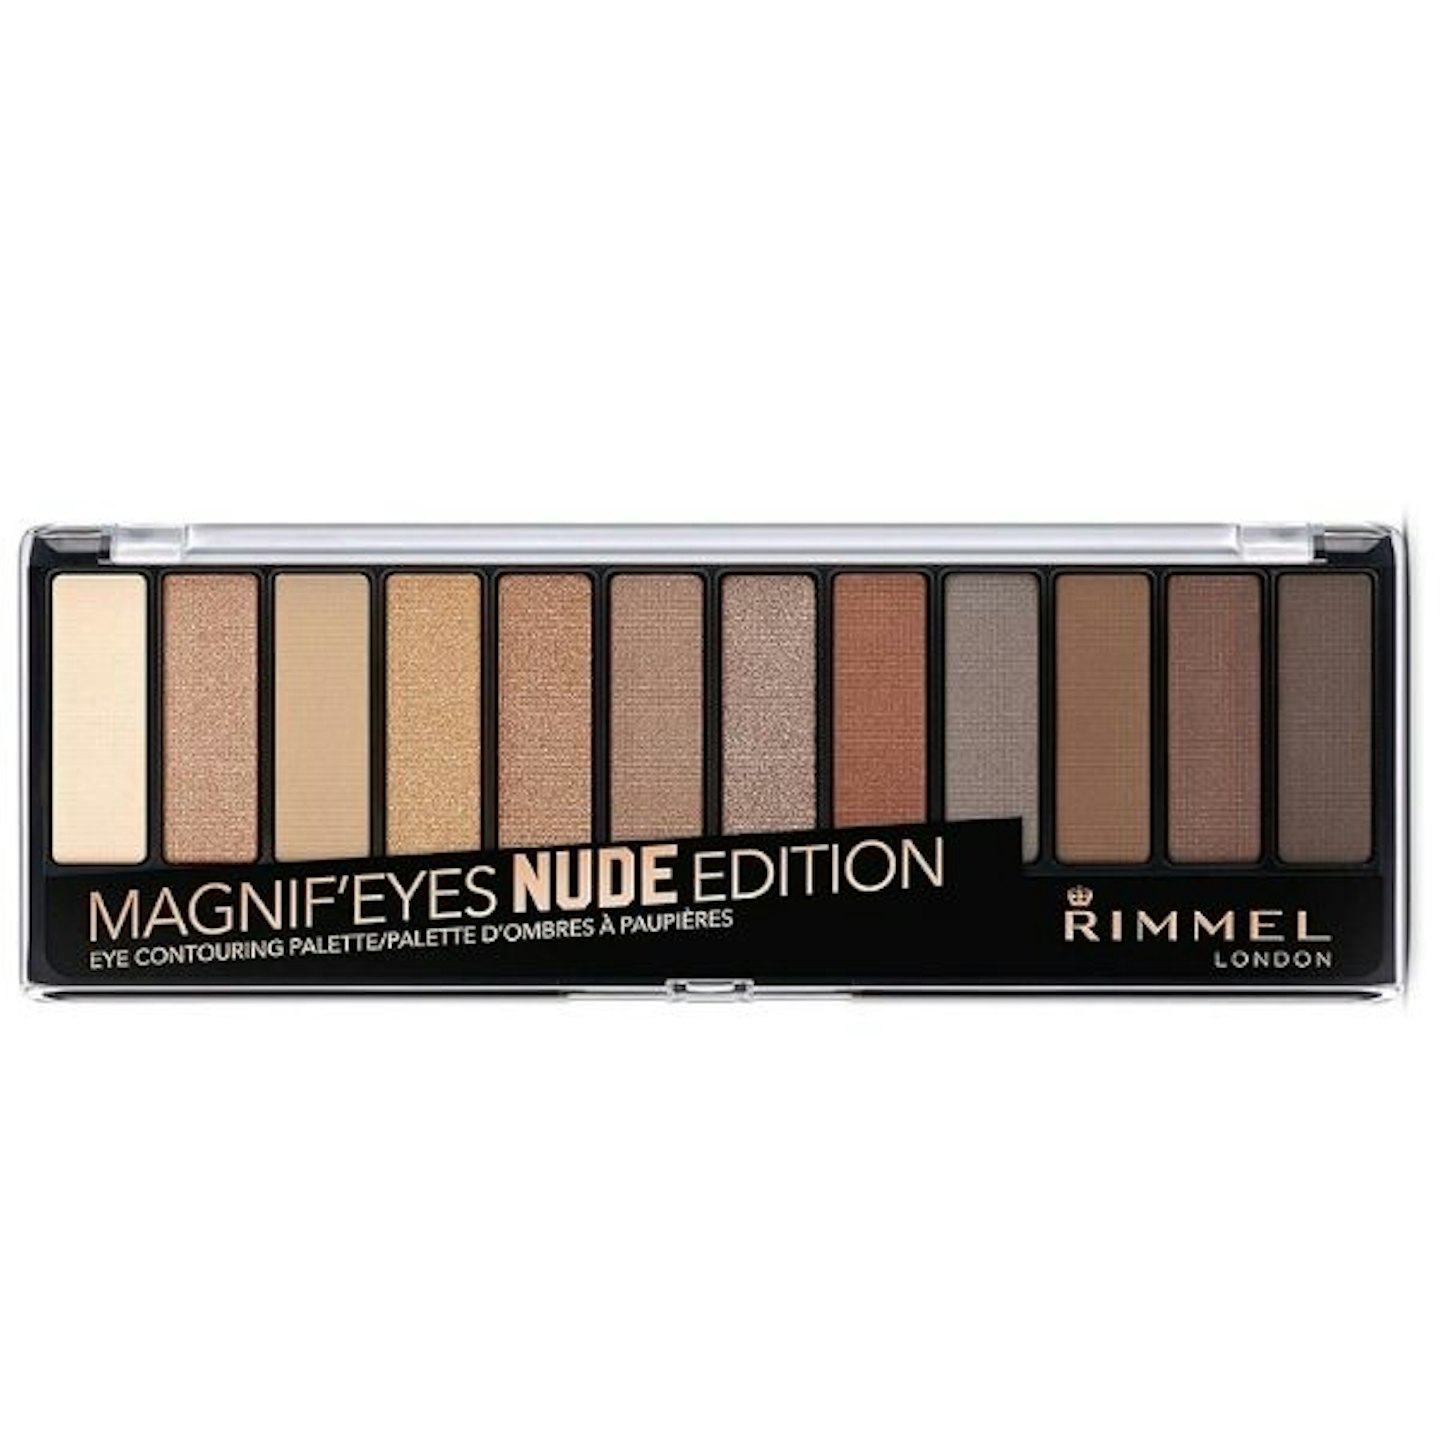 Rimmel Magnif'eyes Nude Edition Eyeshadow Palette, 12 shade